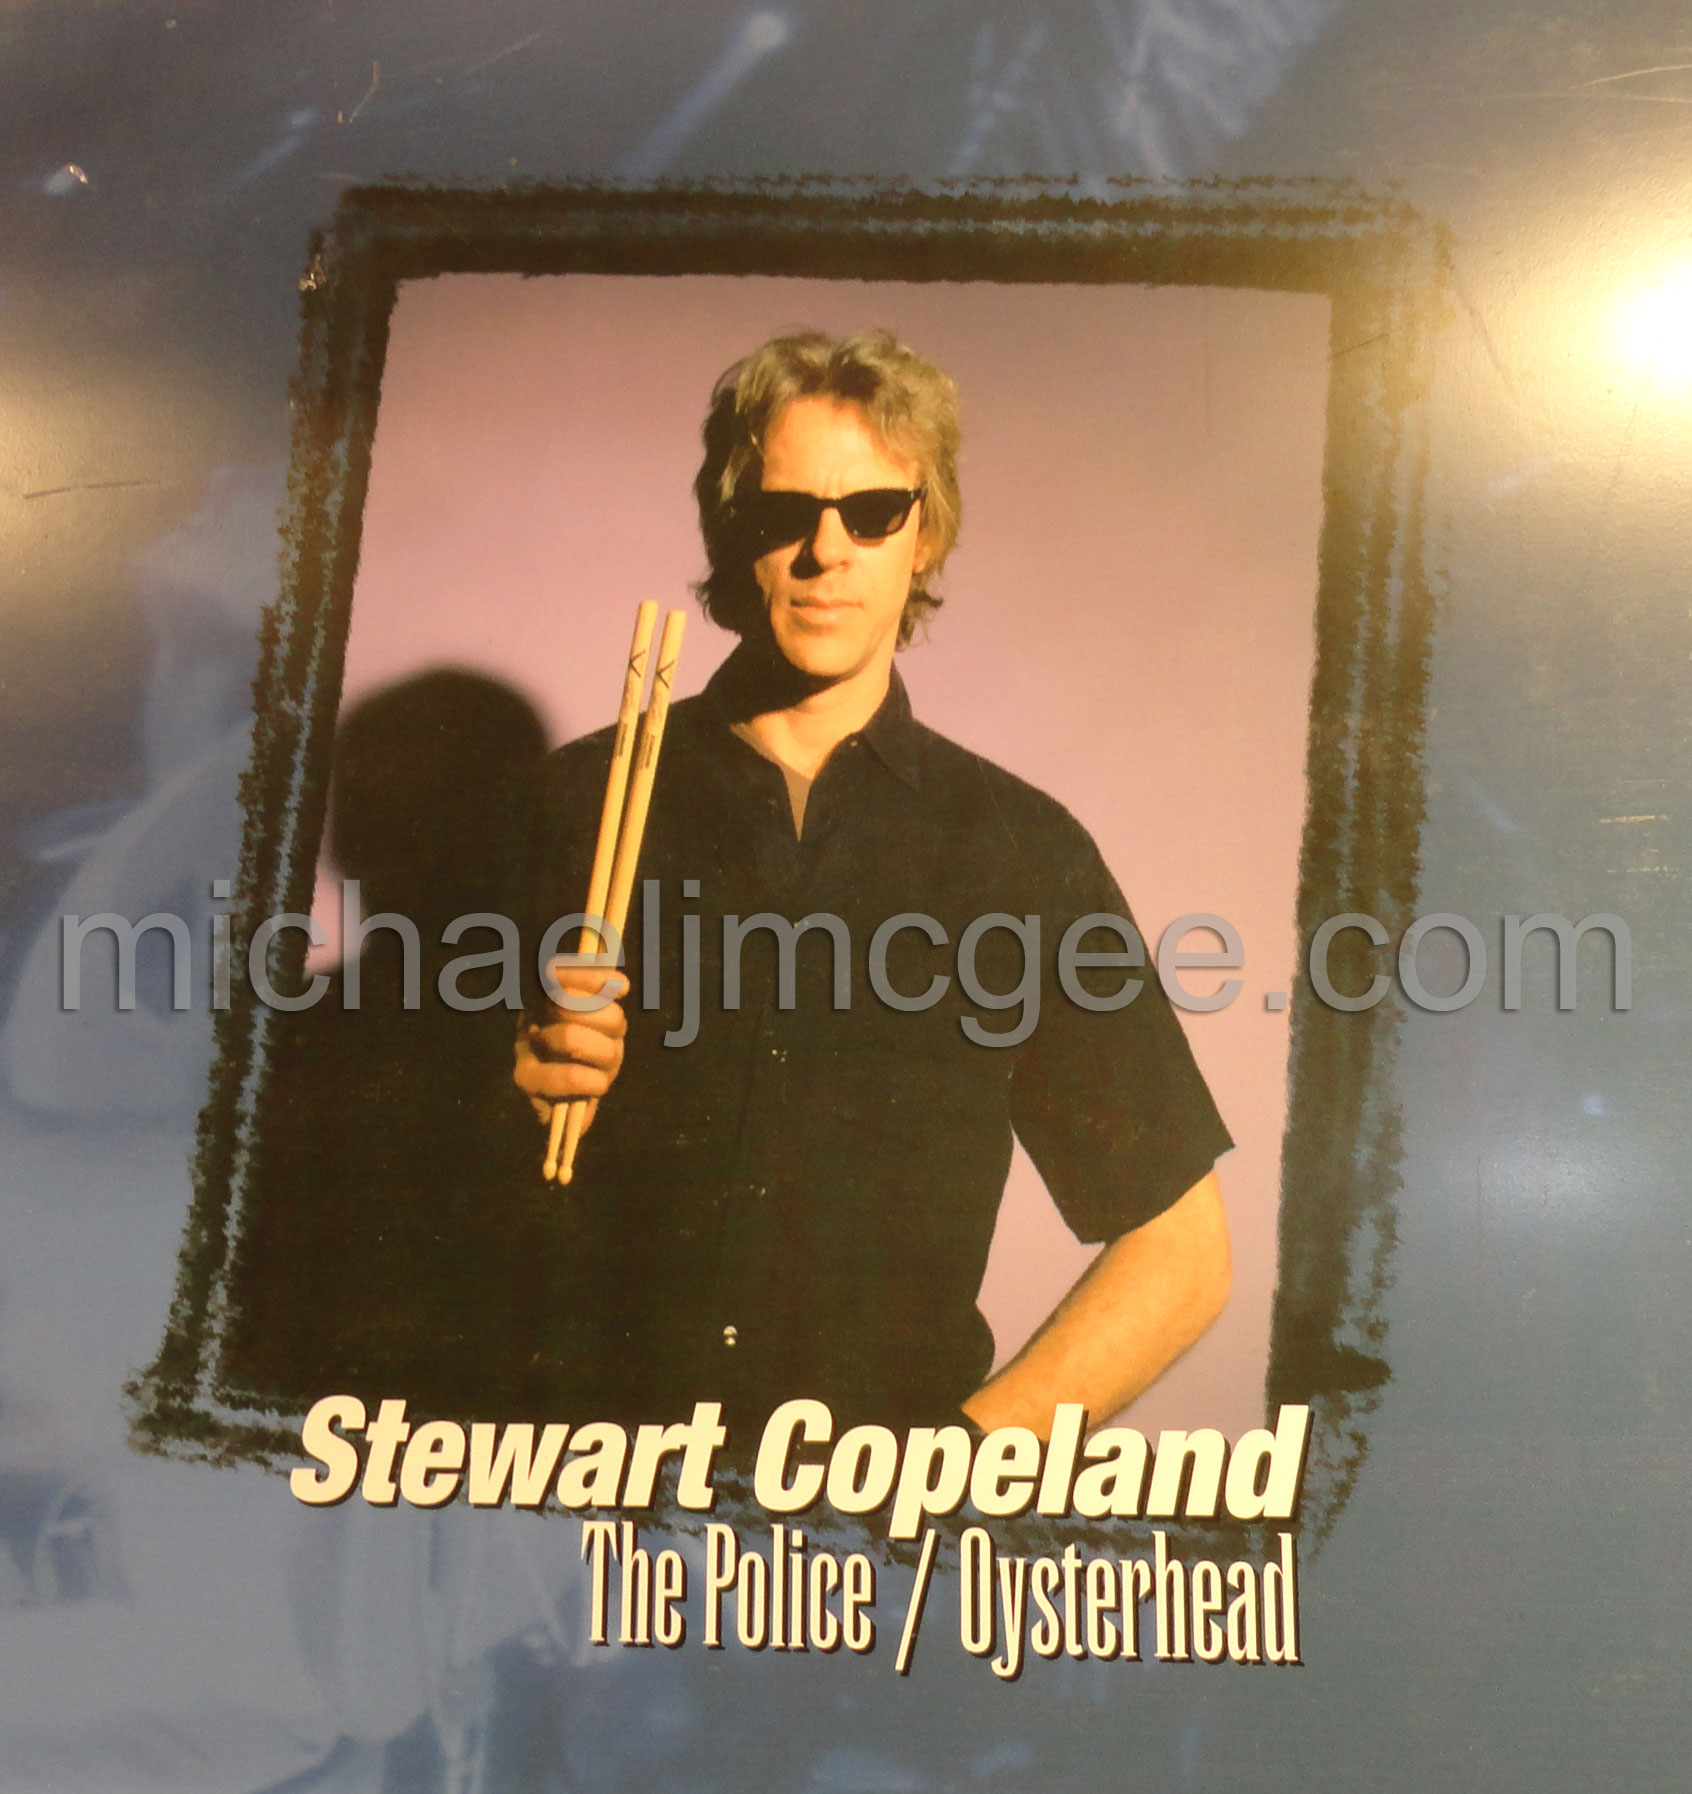 Stewart Copeland / michaeljmcgee.com